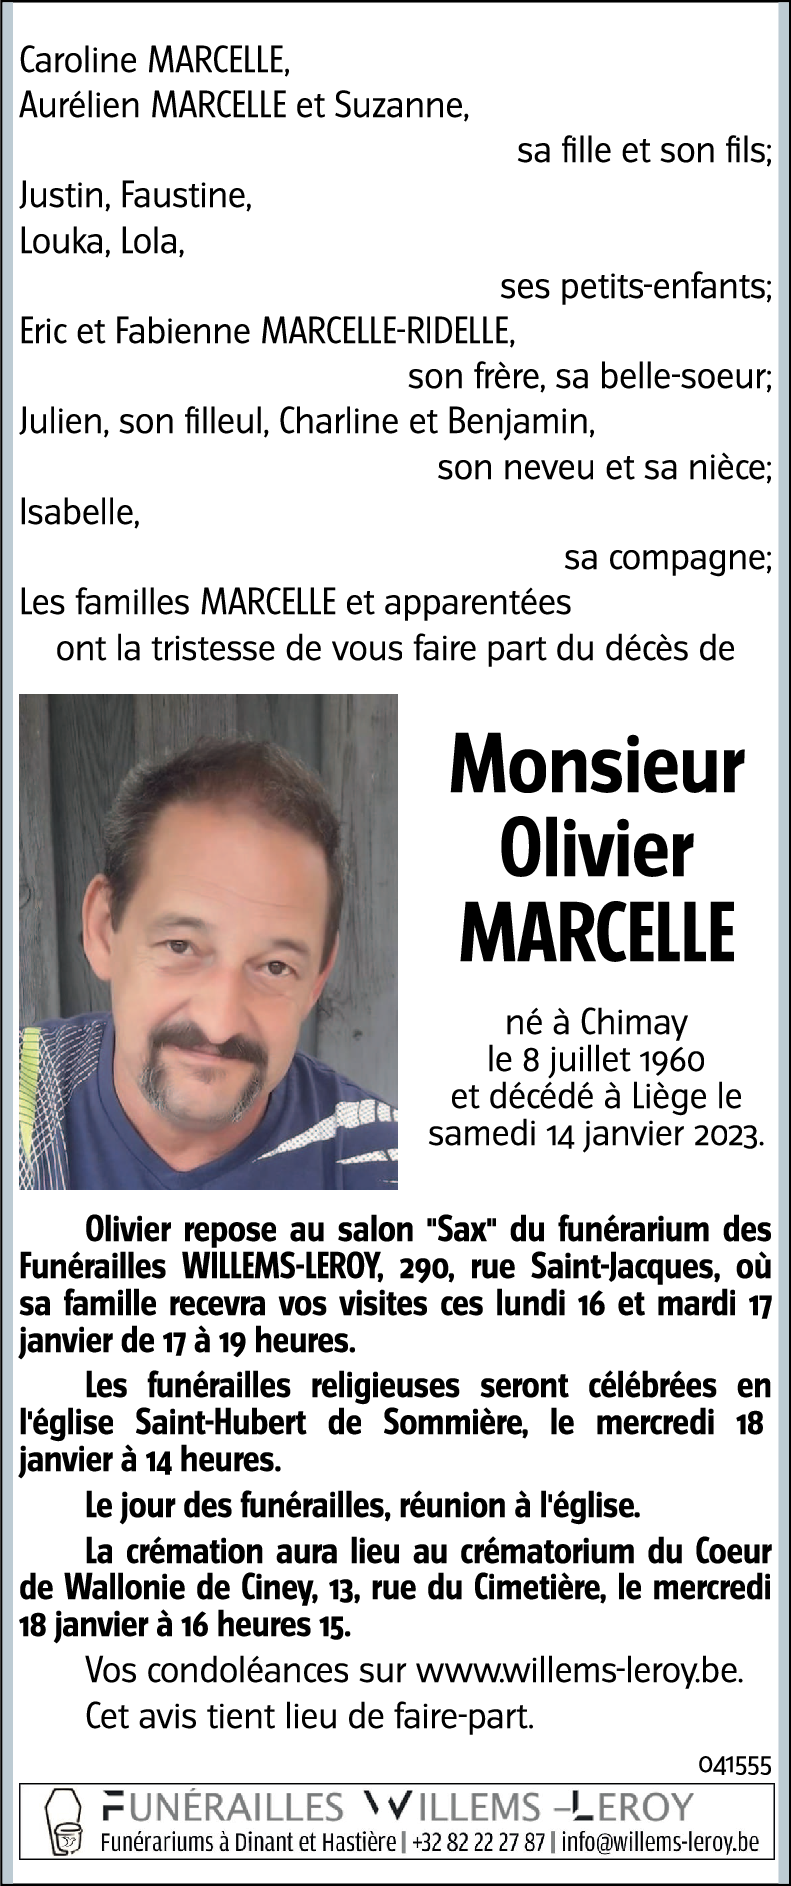 Olivier MARCELLE